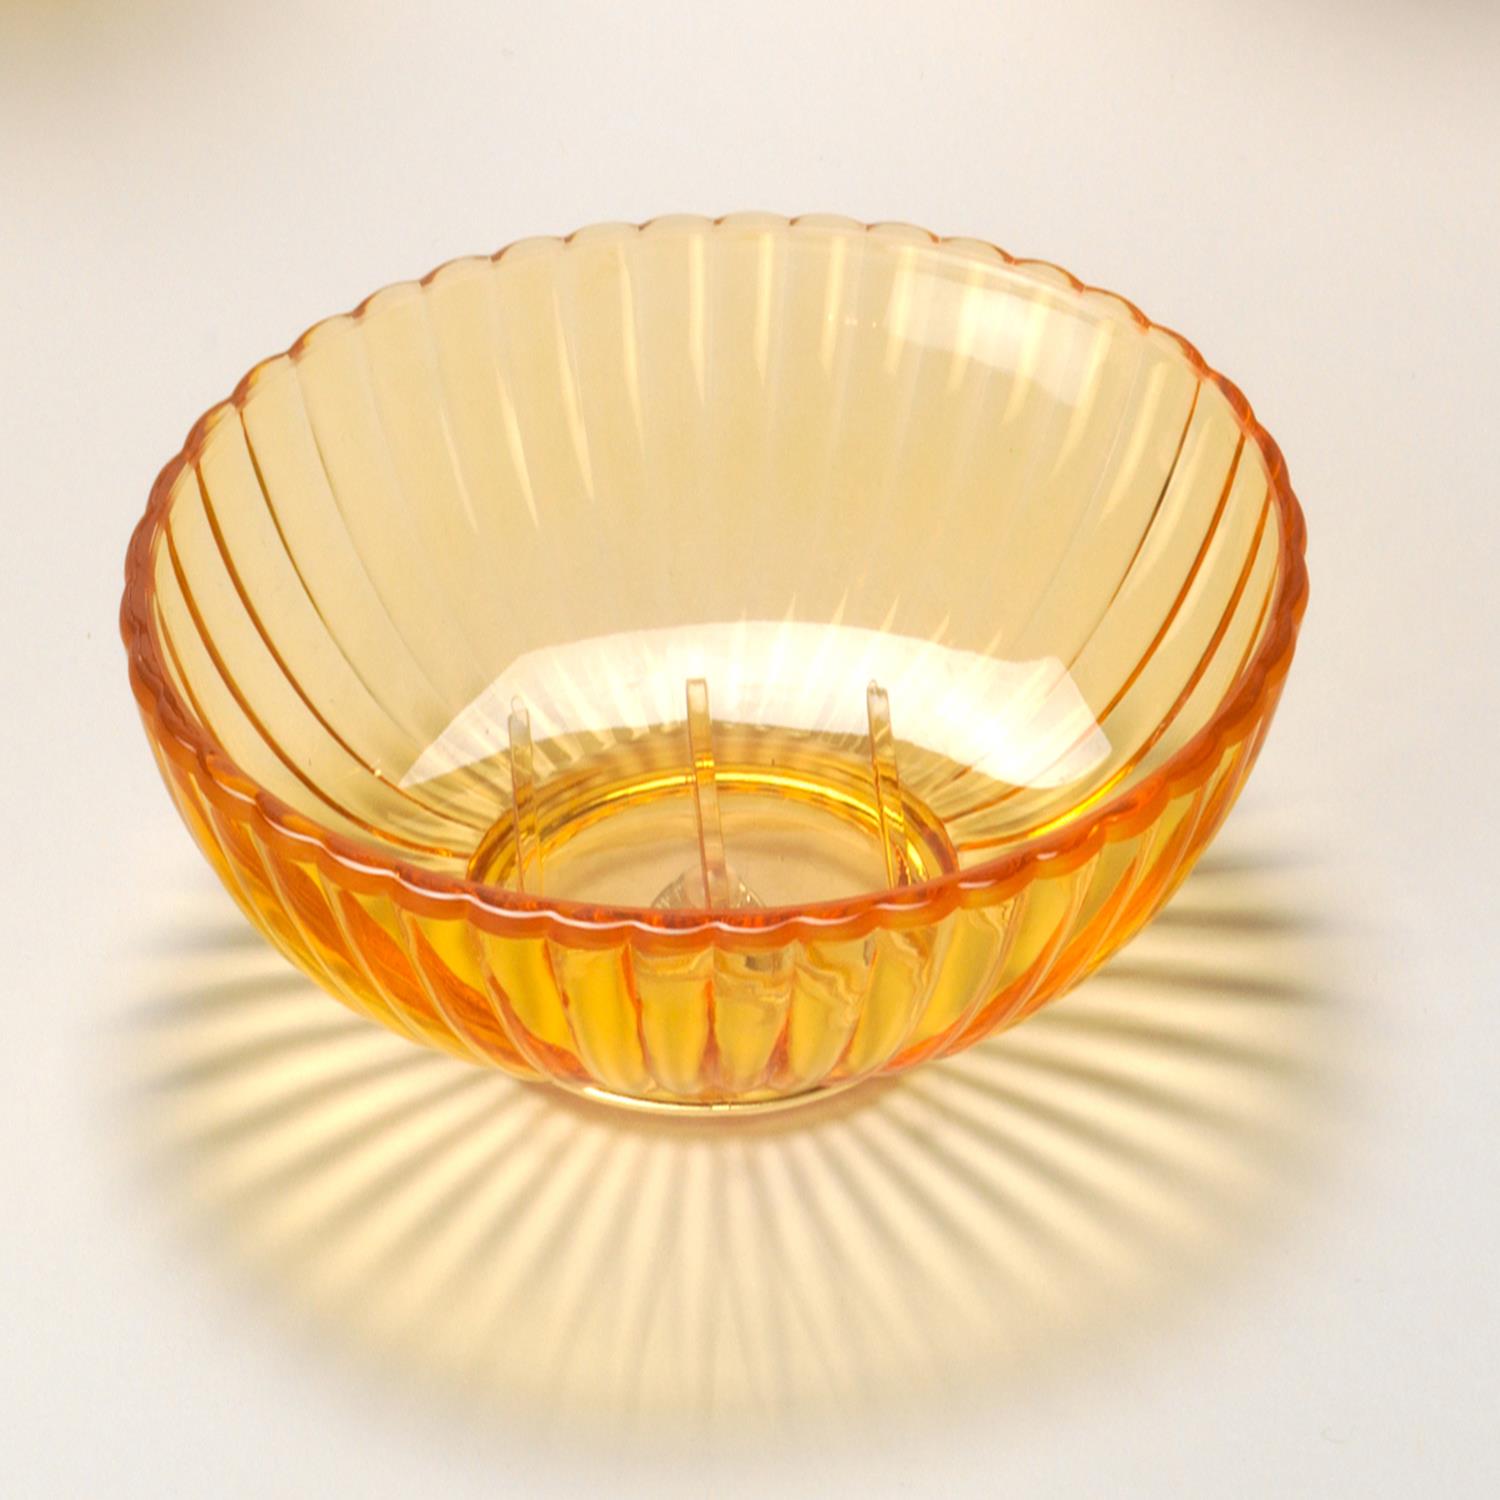 Carnation Home Orange Rib-Textured Soap Dish 71821131464 | eBay